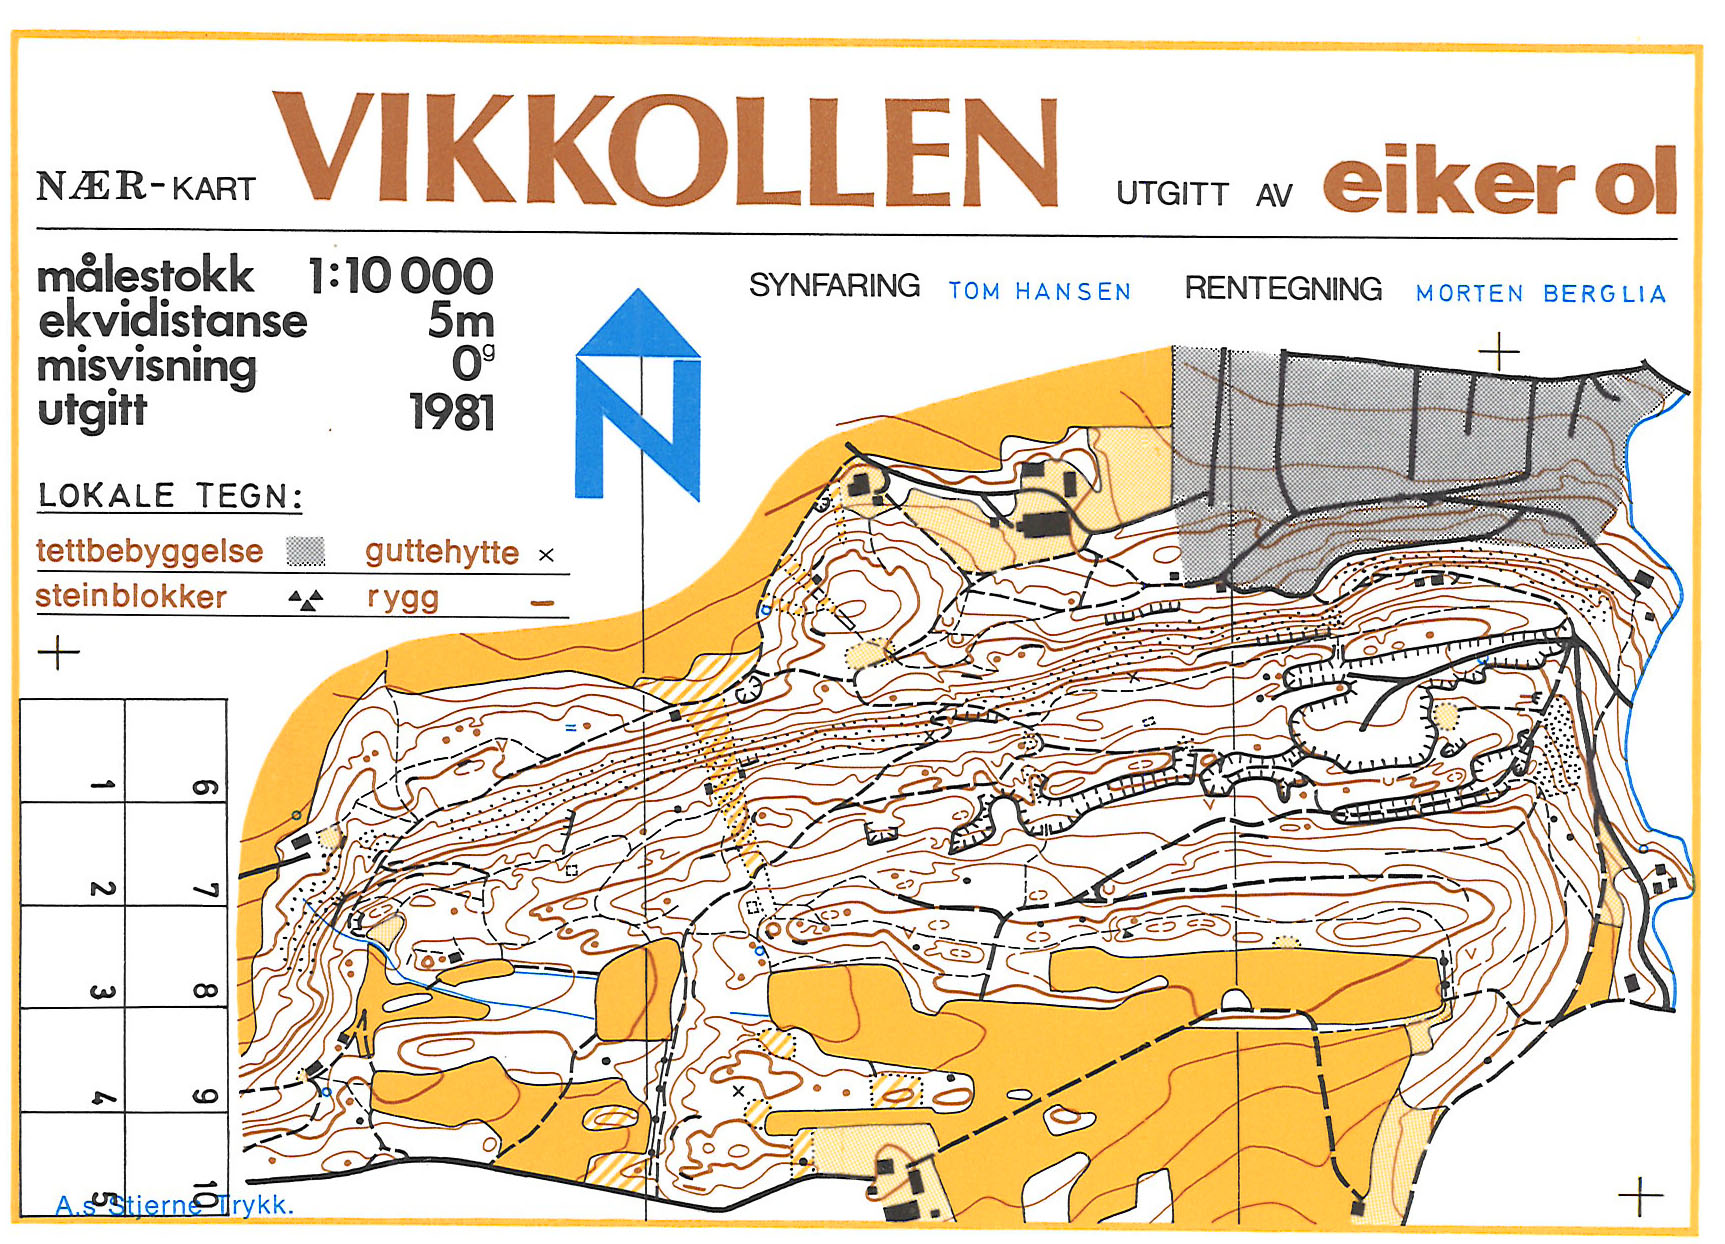 Vikkollen (01-01-1981)